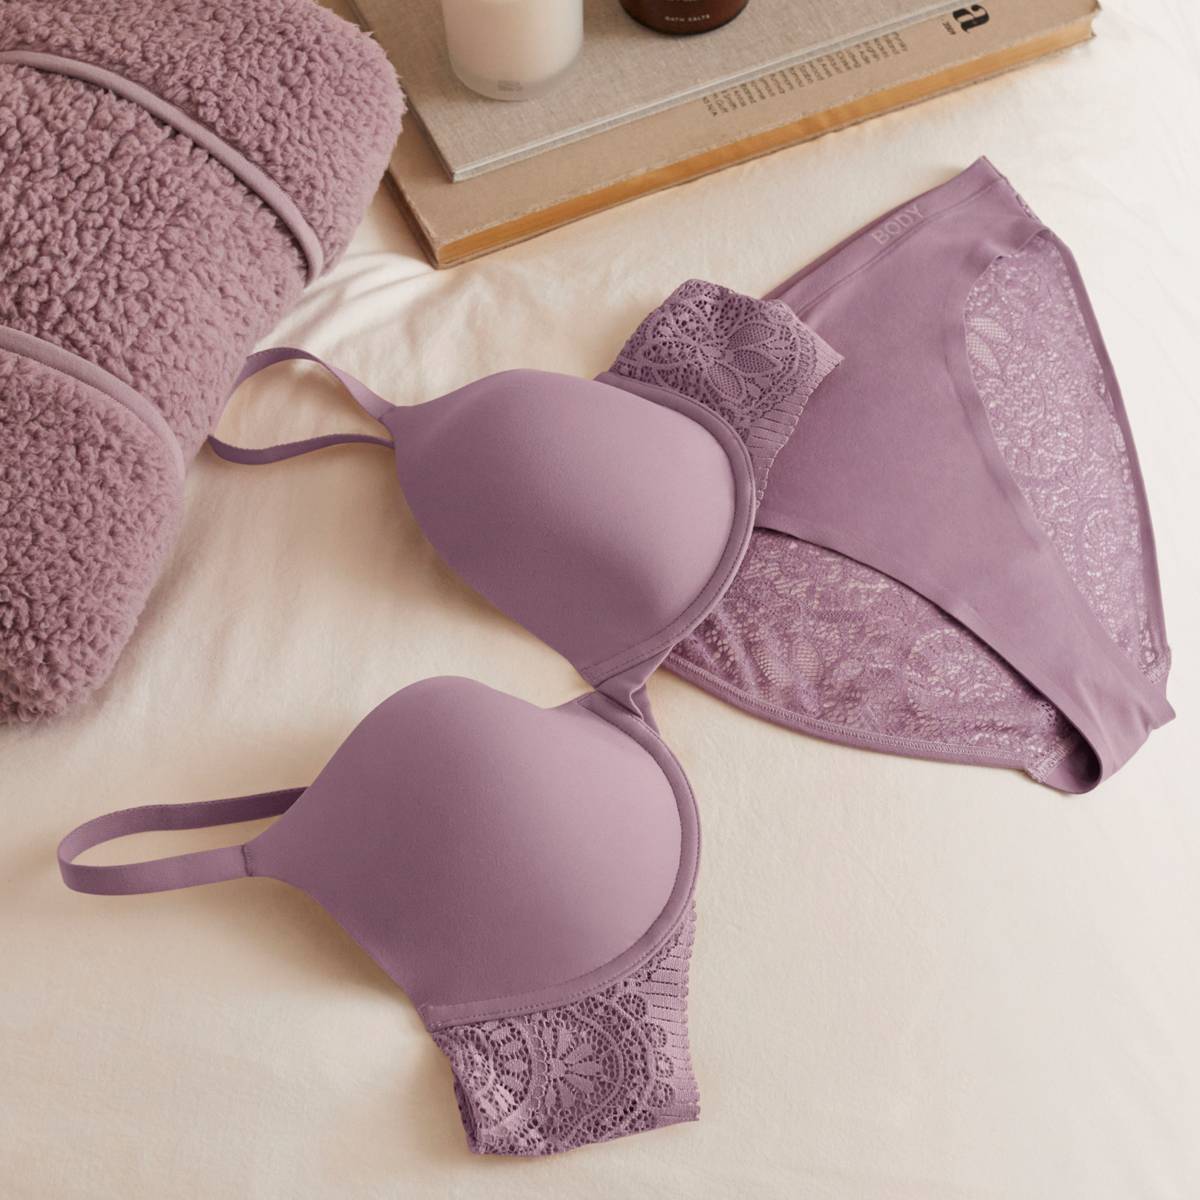 Matching purple lingerie set. Bras